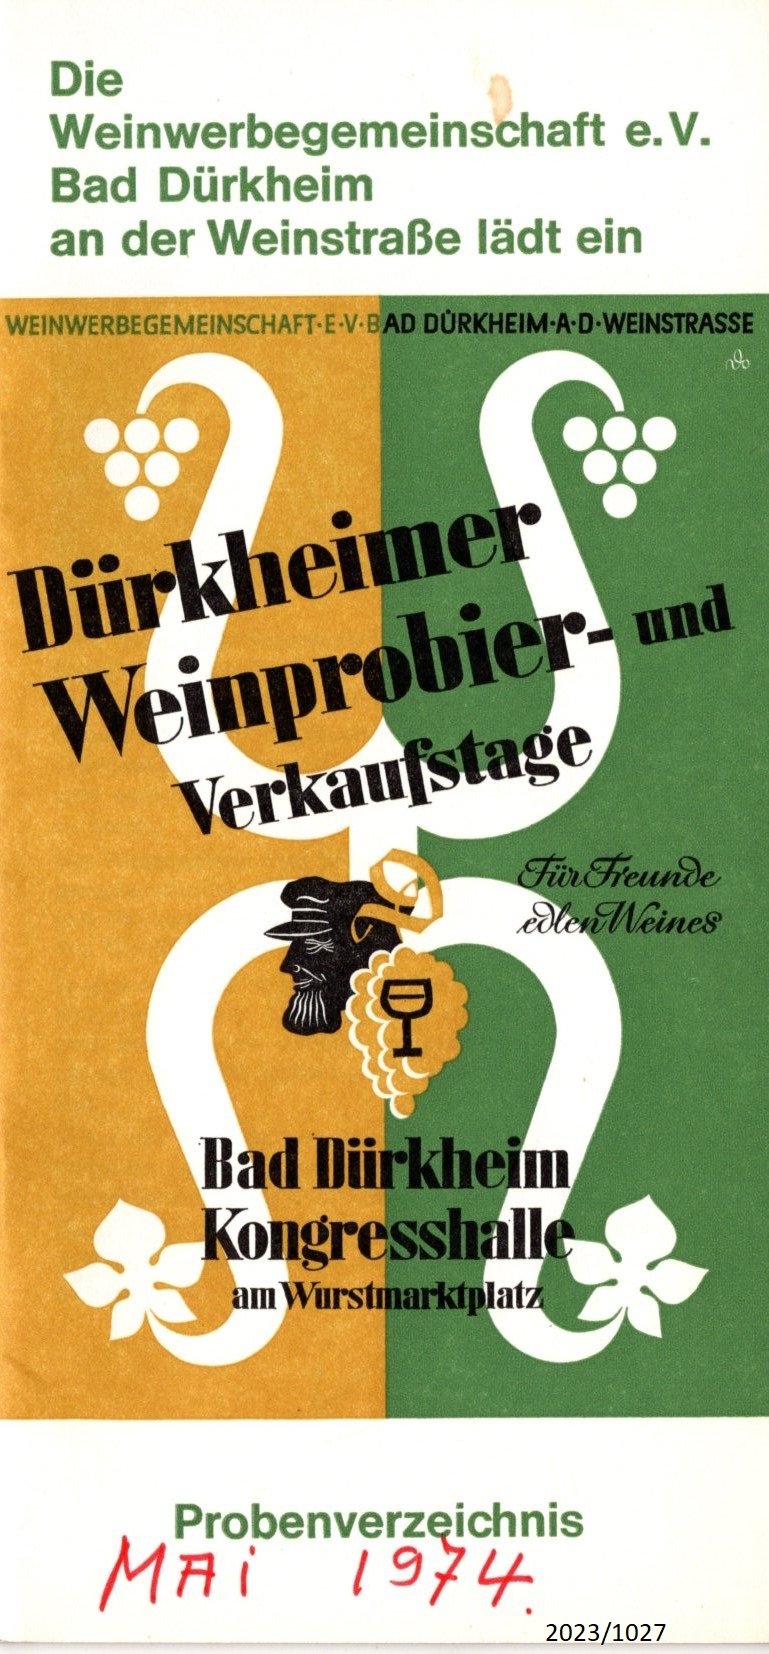 Dürkheimer Weinprobier- und Verkaufstage 1974 (Stadtmuseum Bad Dürkheim im Kulturzentrum Haus Catoir CC BY-NC-SA)